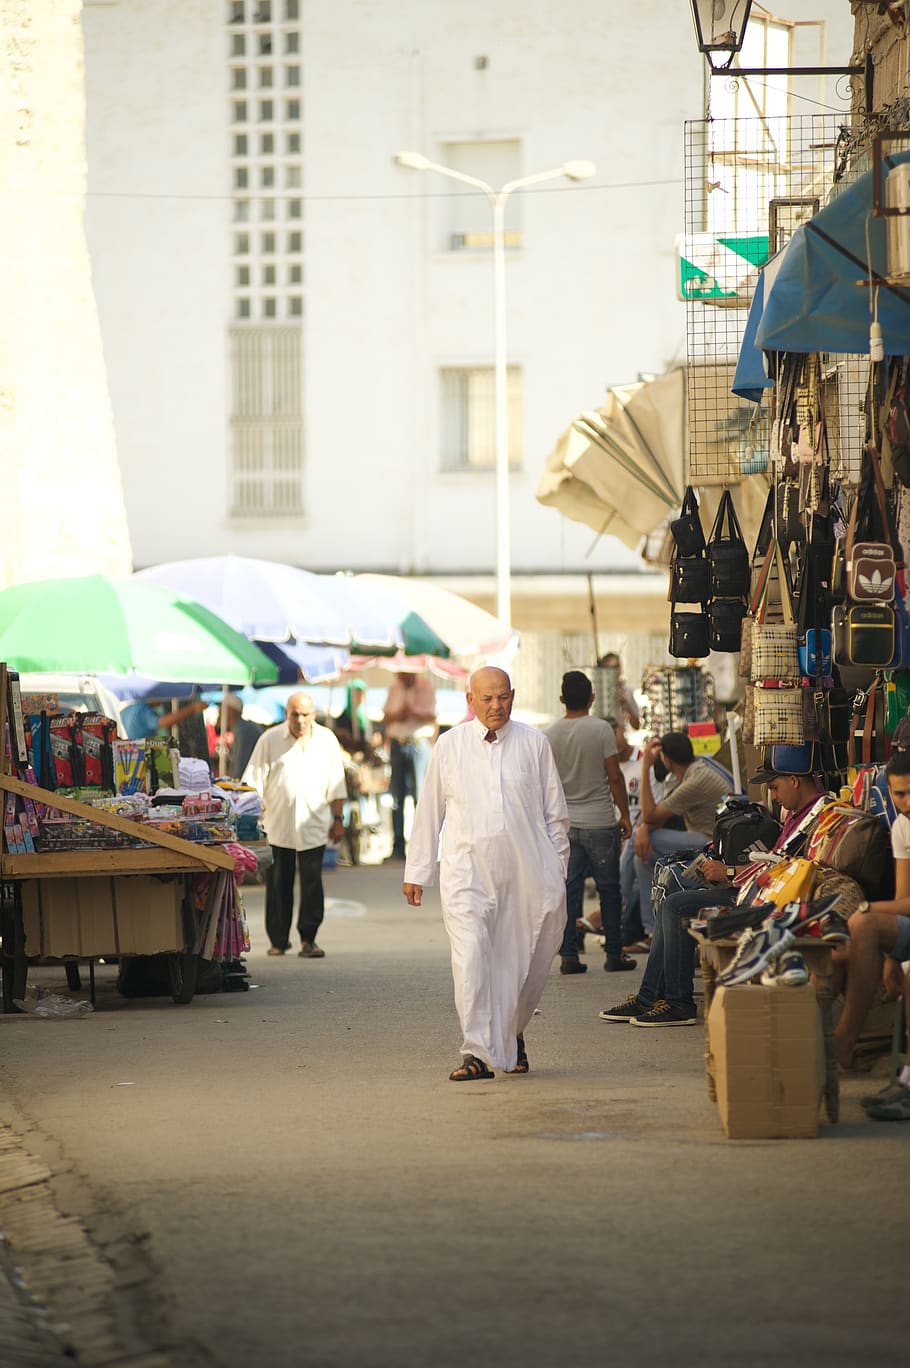 tunisia, market, man, goes, muslims, seller, buyer, bags, goods, tents